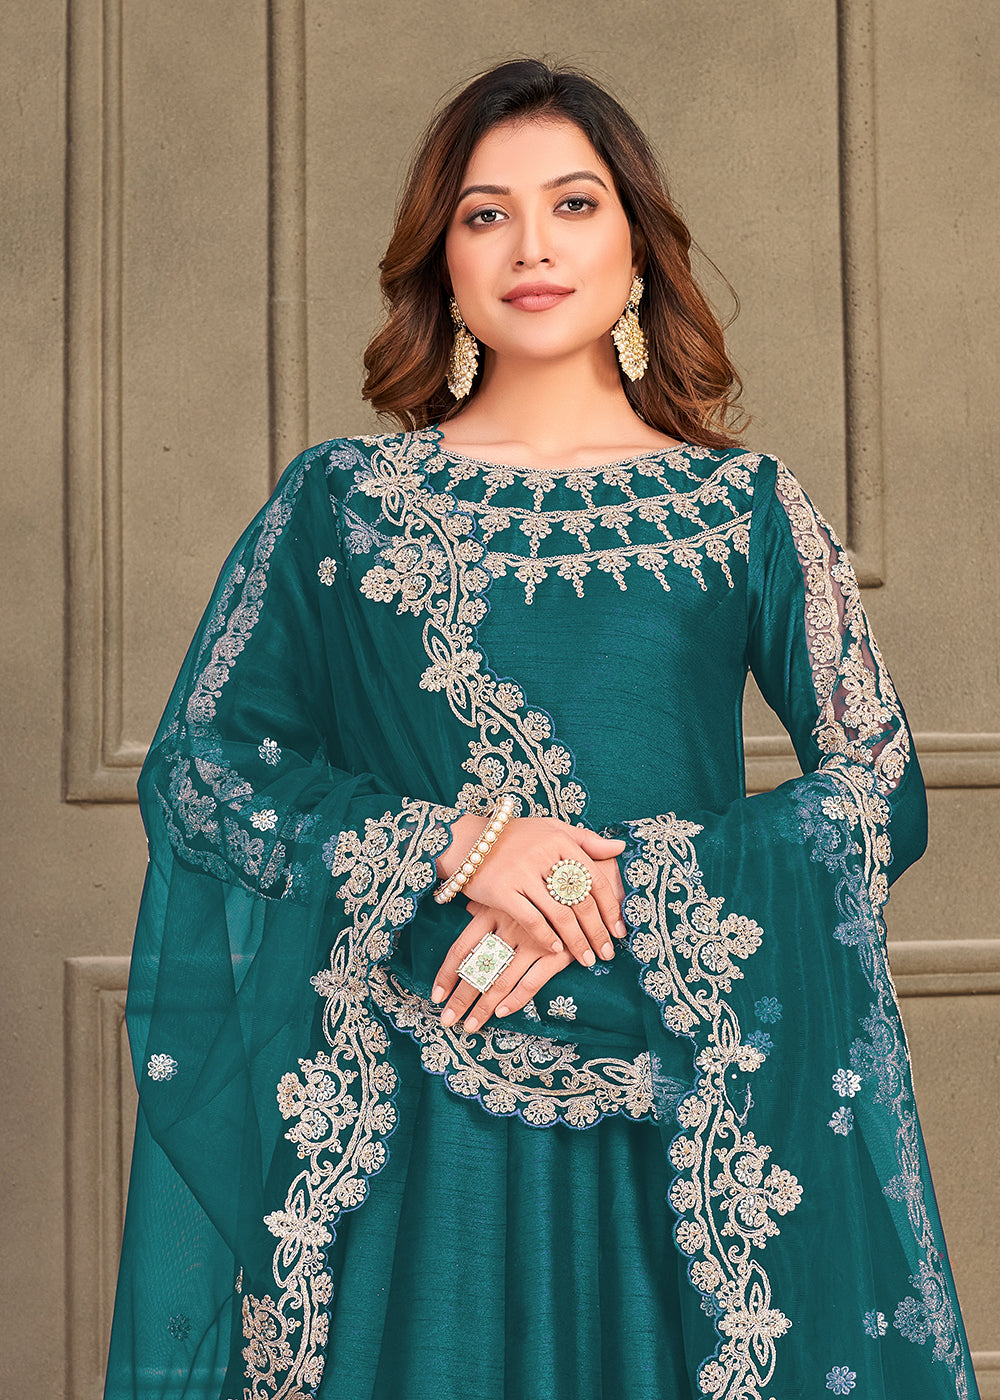 Buy Now Stylish Teal Green Art Silk Floor Length Anarkali Dress Online in USA, UK, Australia, New Zealand, Canada & Worldwide at Empress Clothing. 